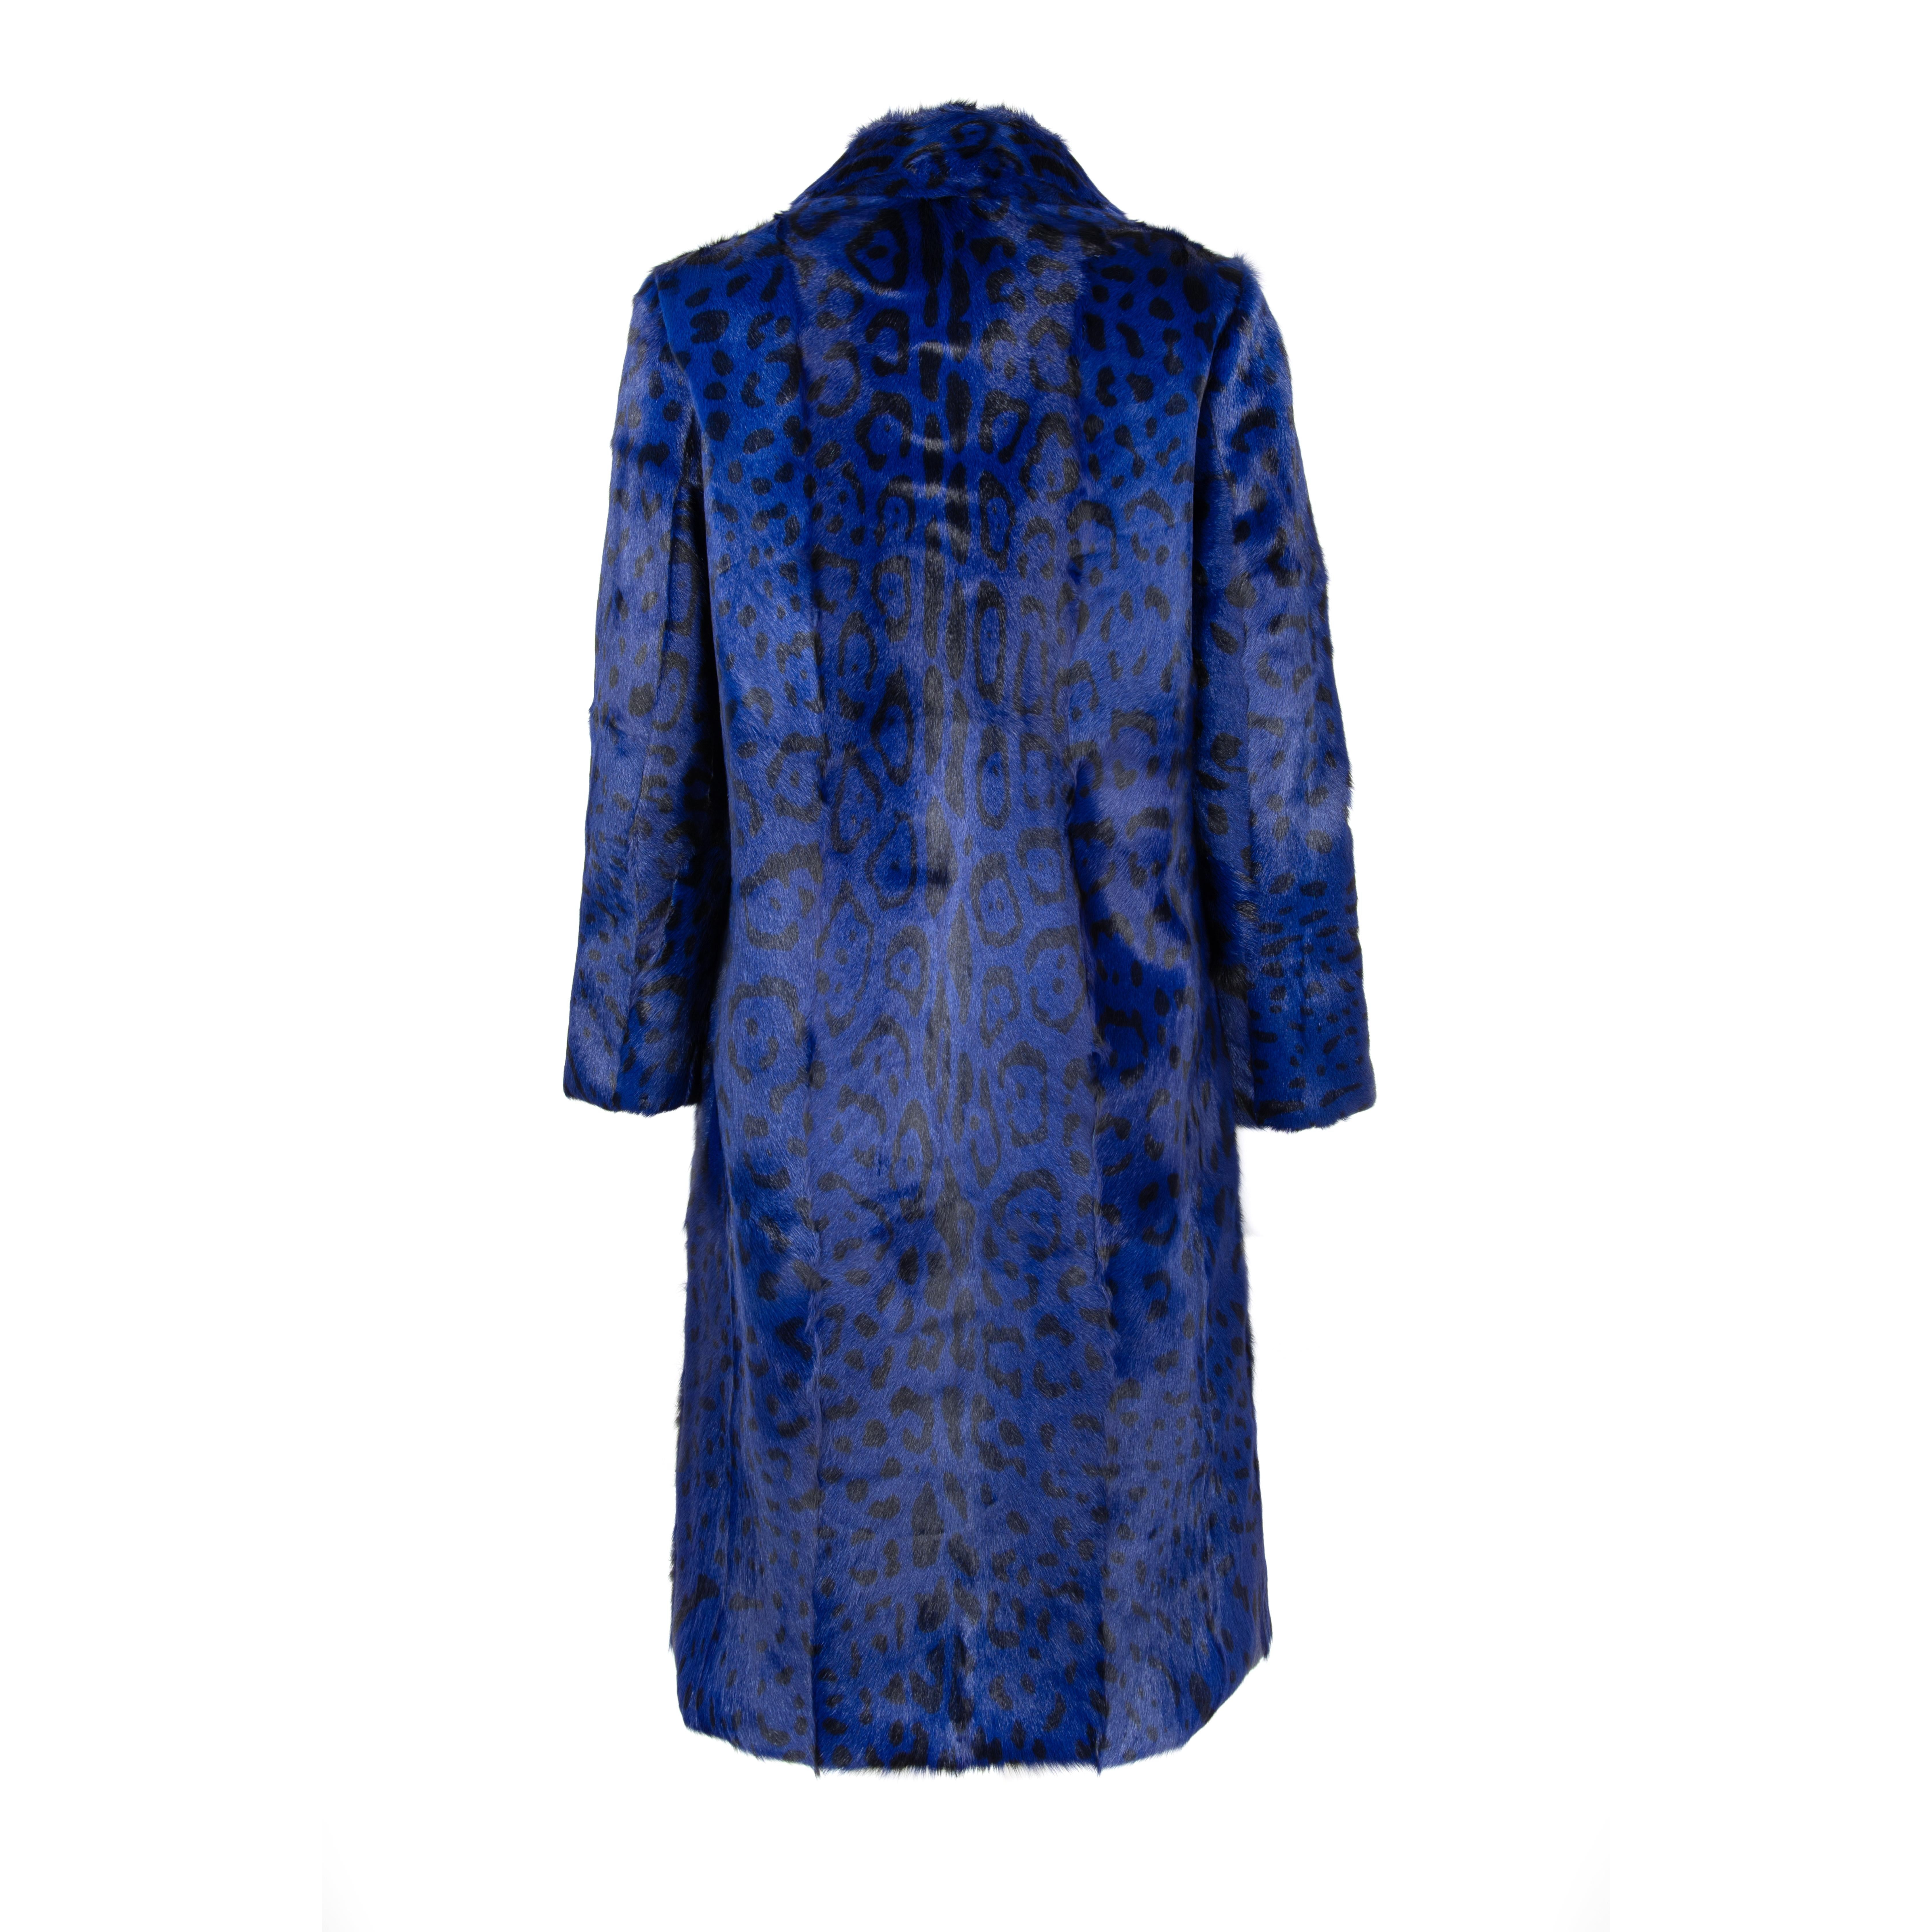 Women's Verheyen London Ink Blue Leopard Print Coat in Goat Hair Fur UK 8 - Brand New 